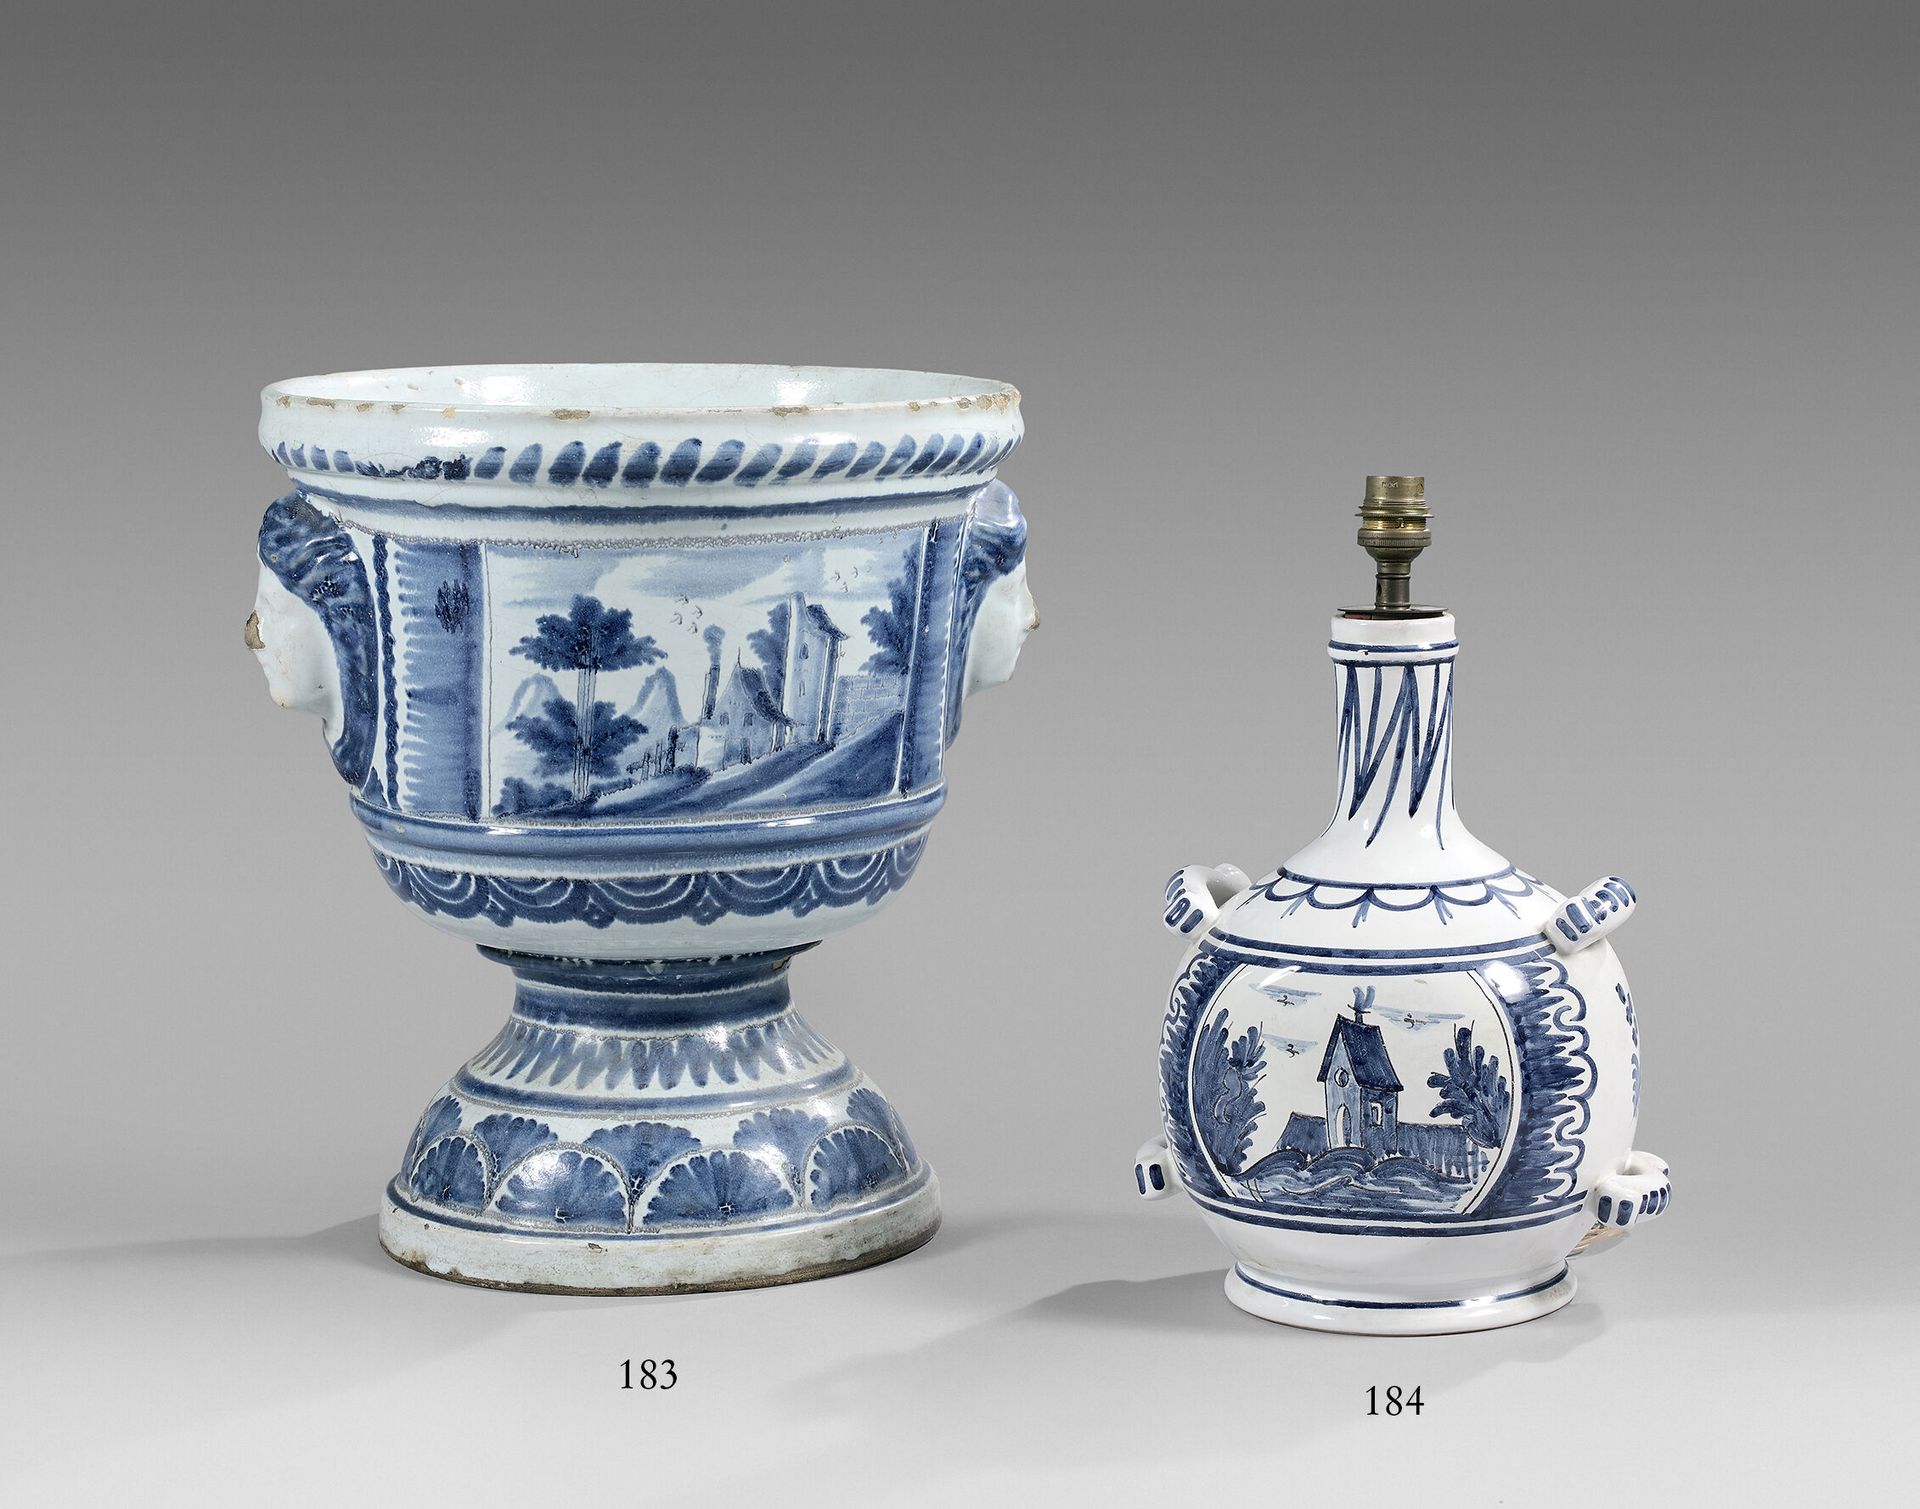 Null 饰有蓝色山水纹章的陶制瓶身花瓶

内韦尔的蒙塔尼昂制造厂

高度：27厘米